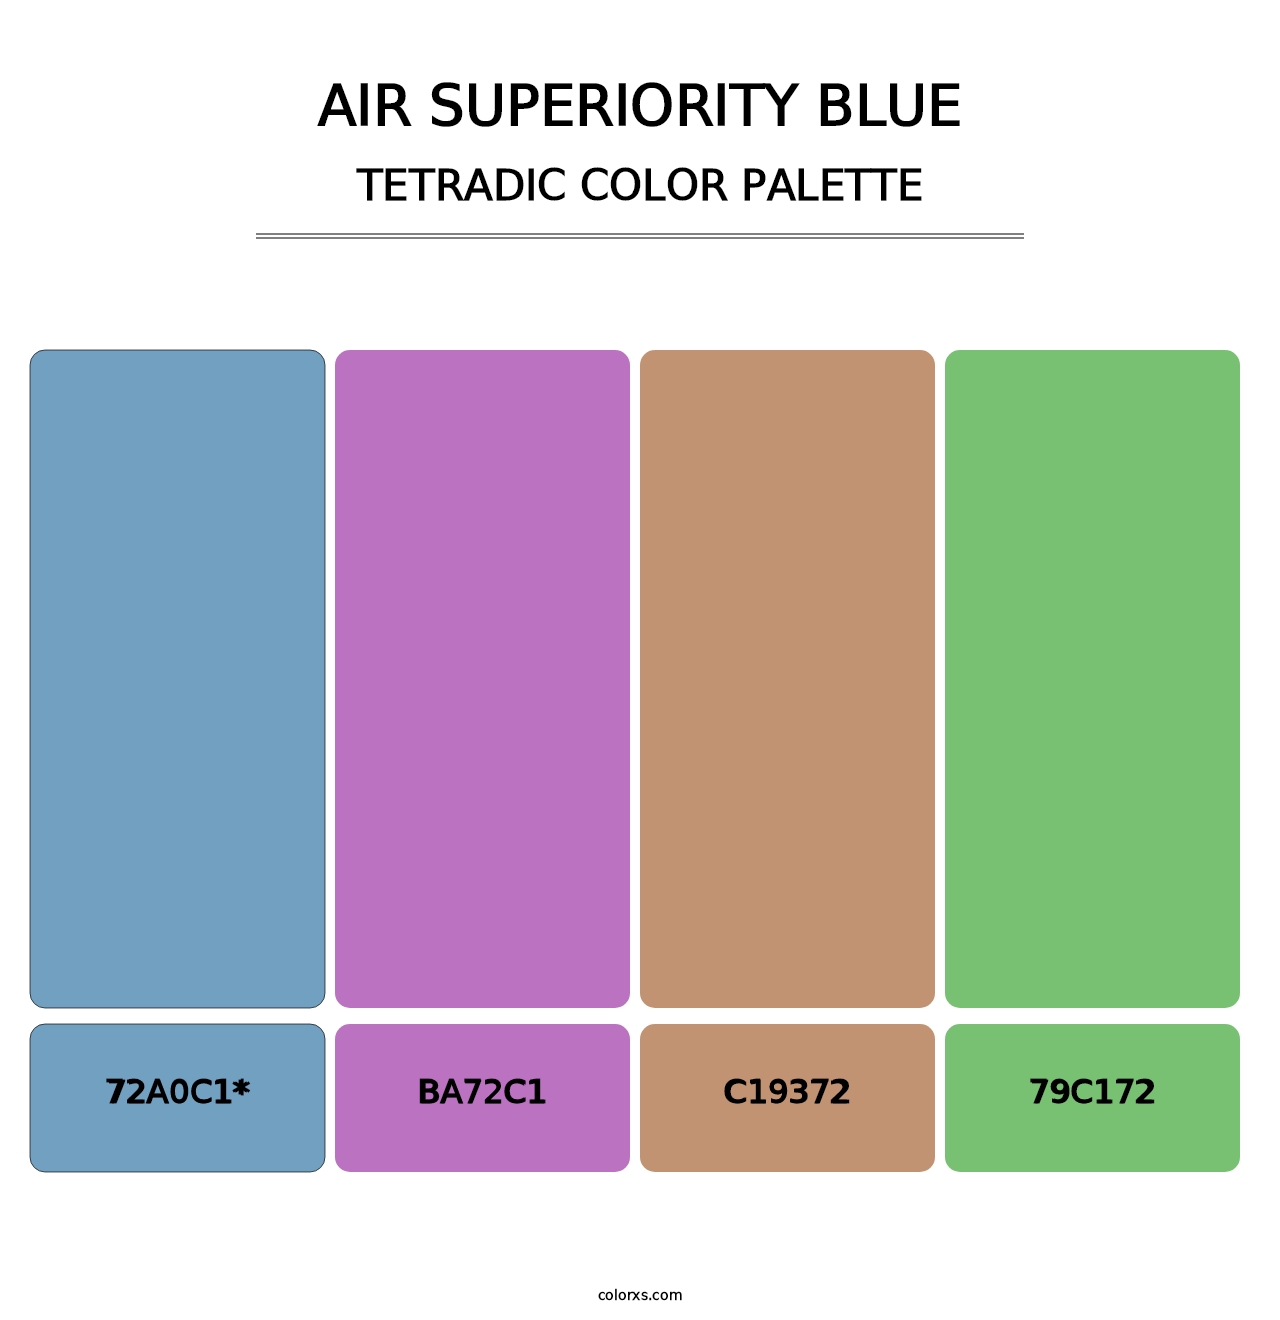 Air Superiority Blue - Tetradic Color Palette